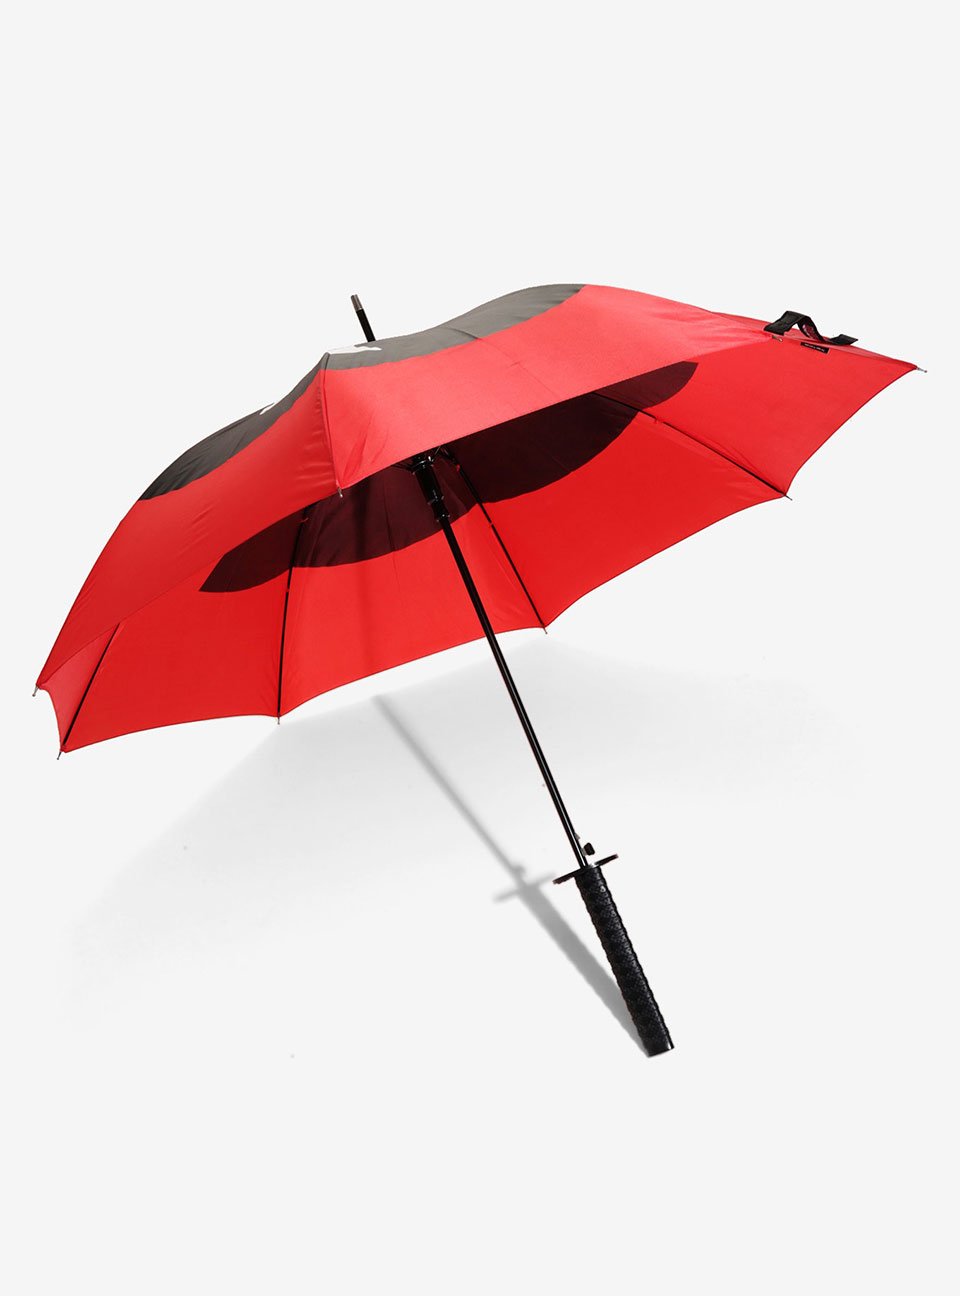 Deadpool Katana Umbrella